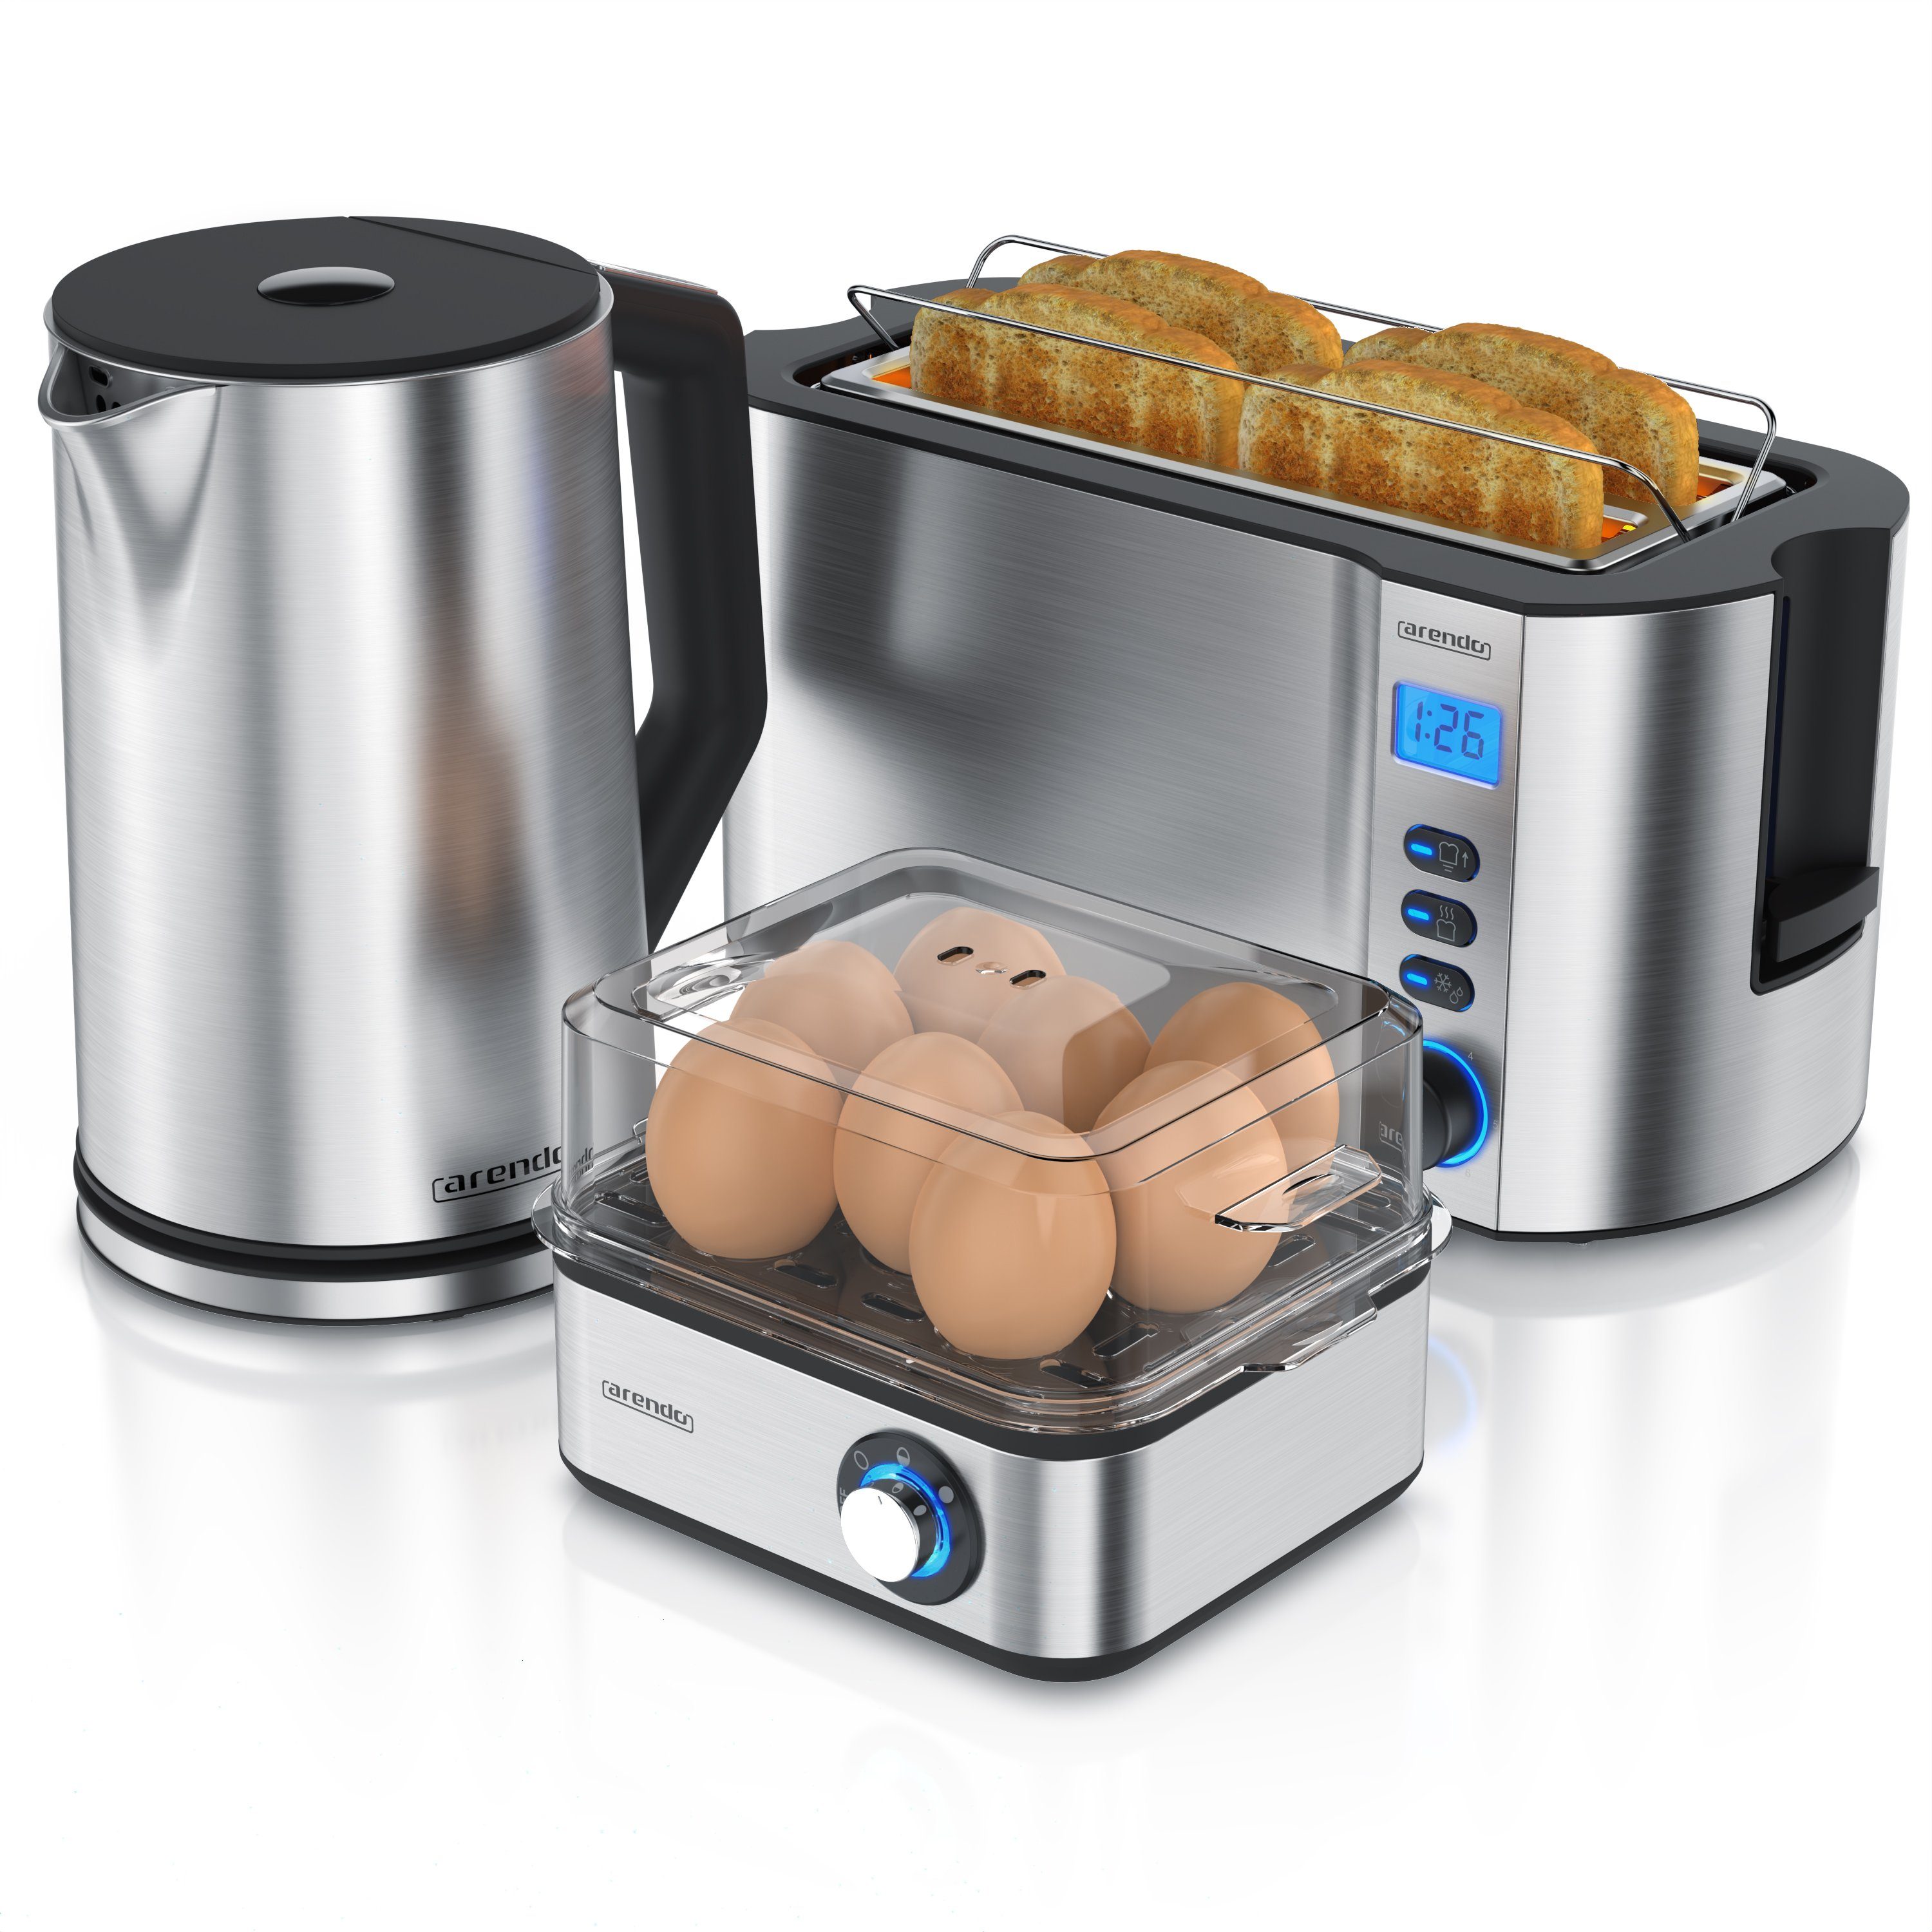 Arendo 8er Frühstücks-Set Wasserkocher Eierkocher, Toaster, (3-tlg), Silber 4-Scheiben 1,5l,